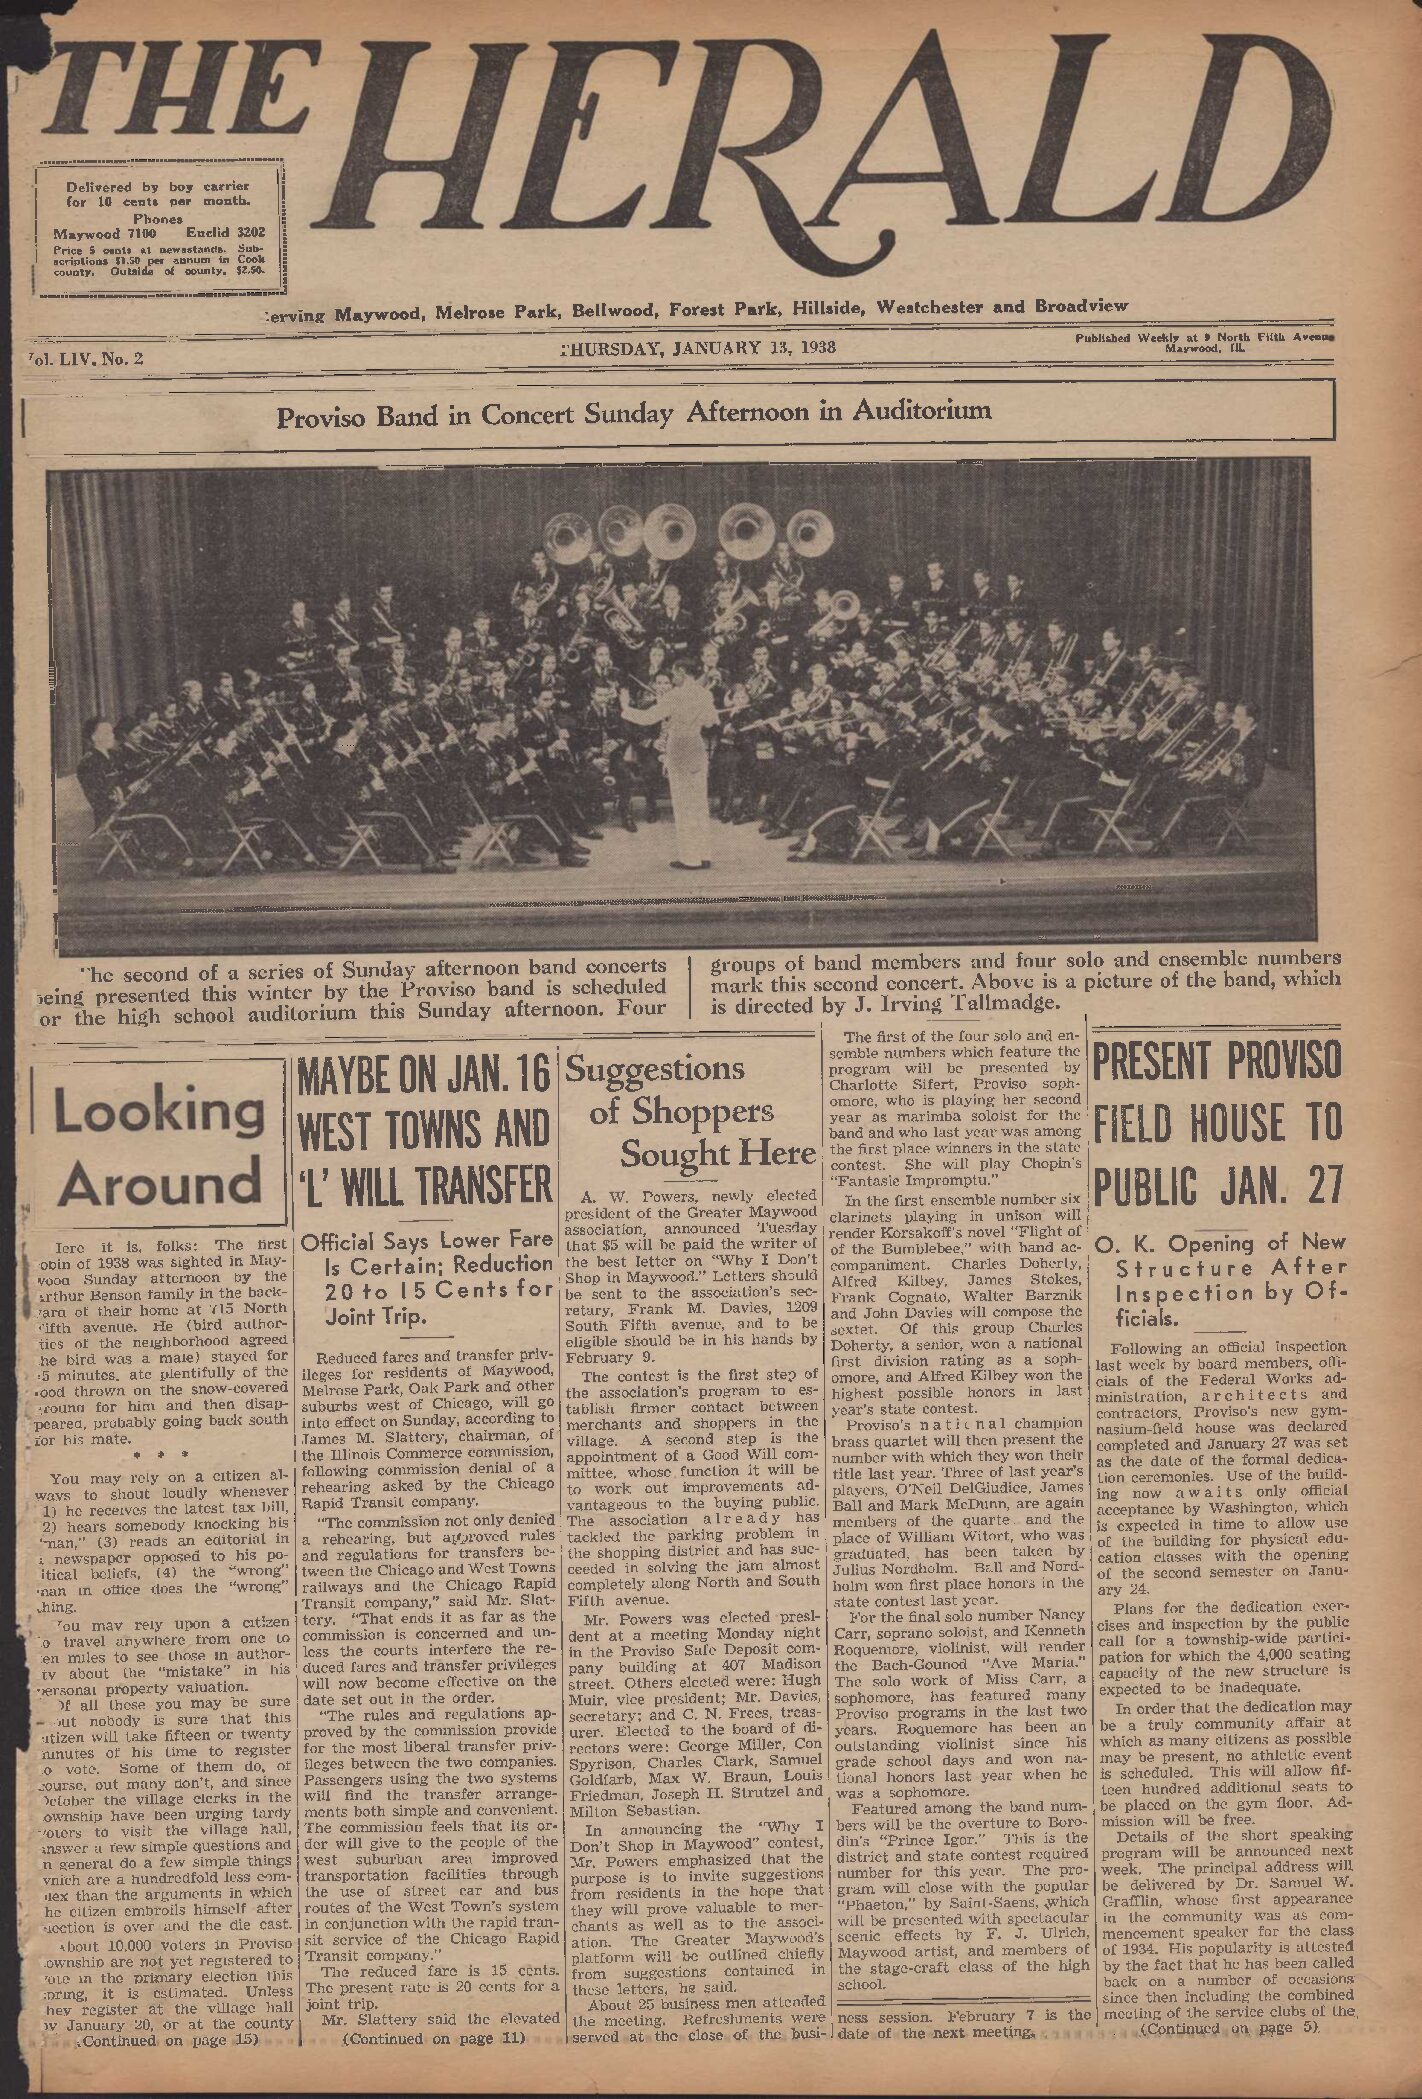 The Herald – 19380113